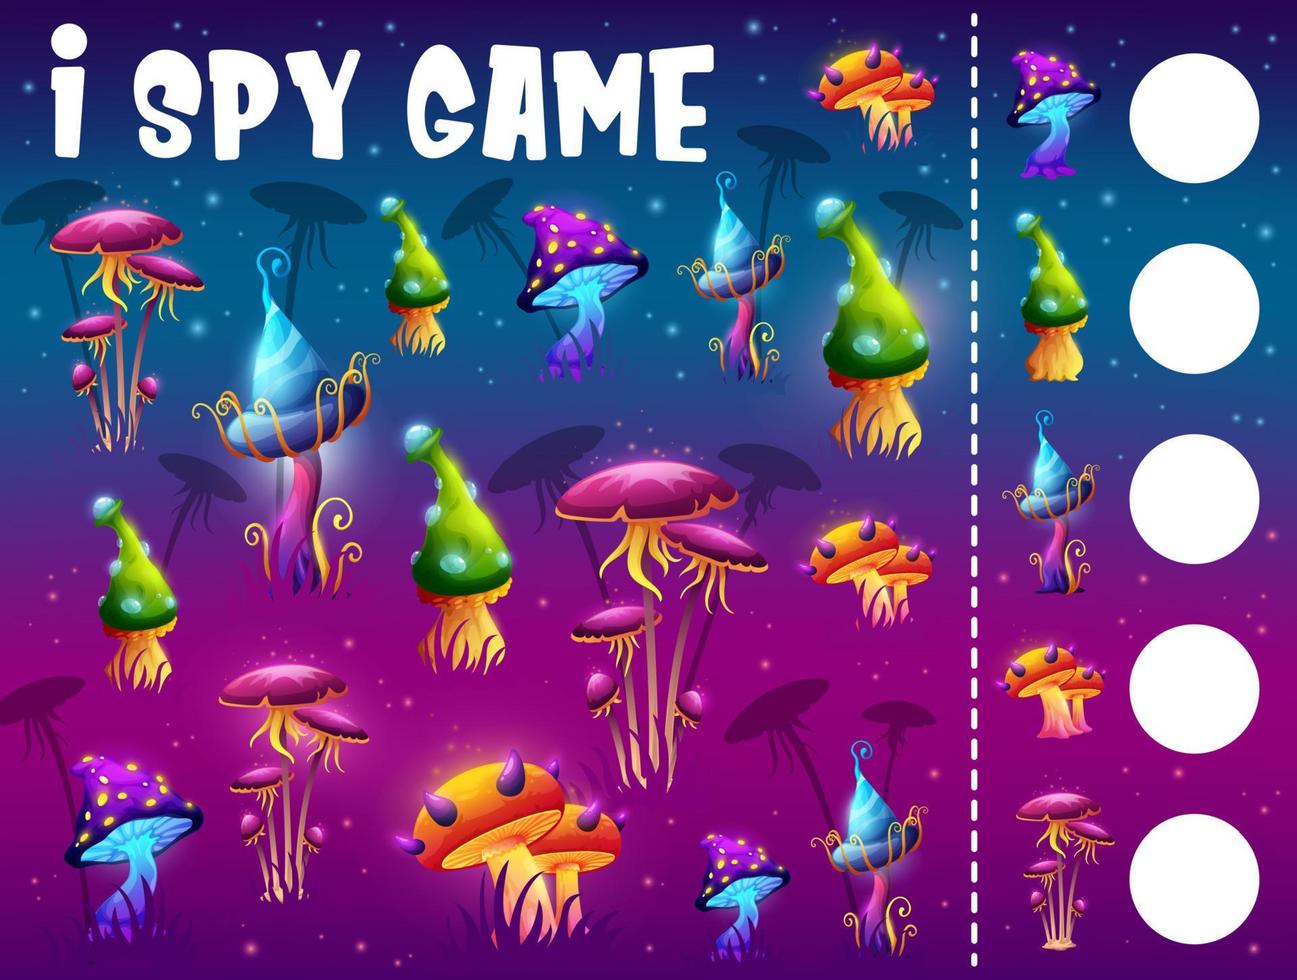 I spy game worksheet with luminous magic mushroom vector